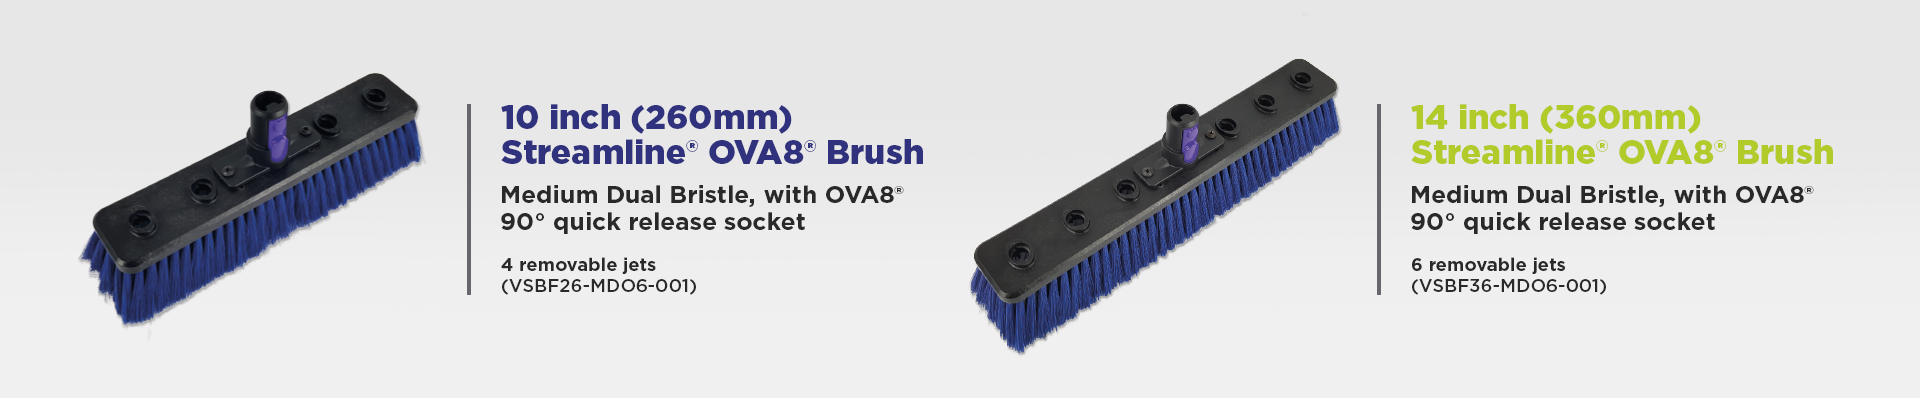 OVA8® telescopic pole brush heads